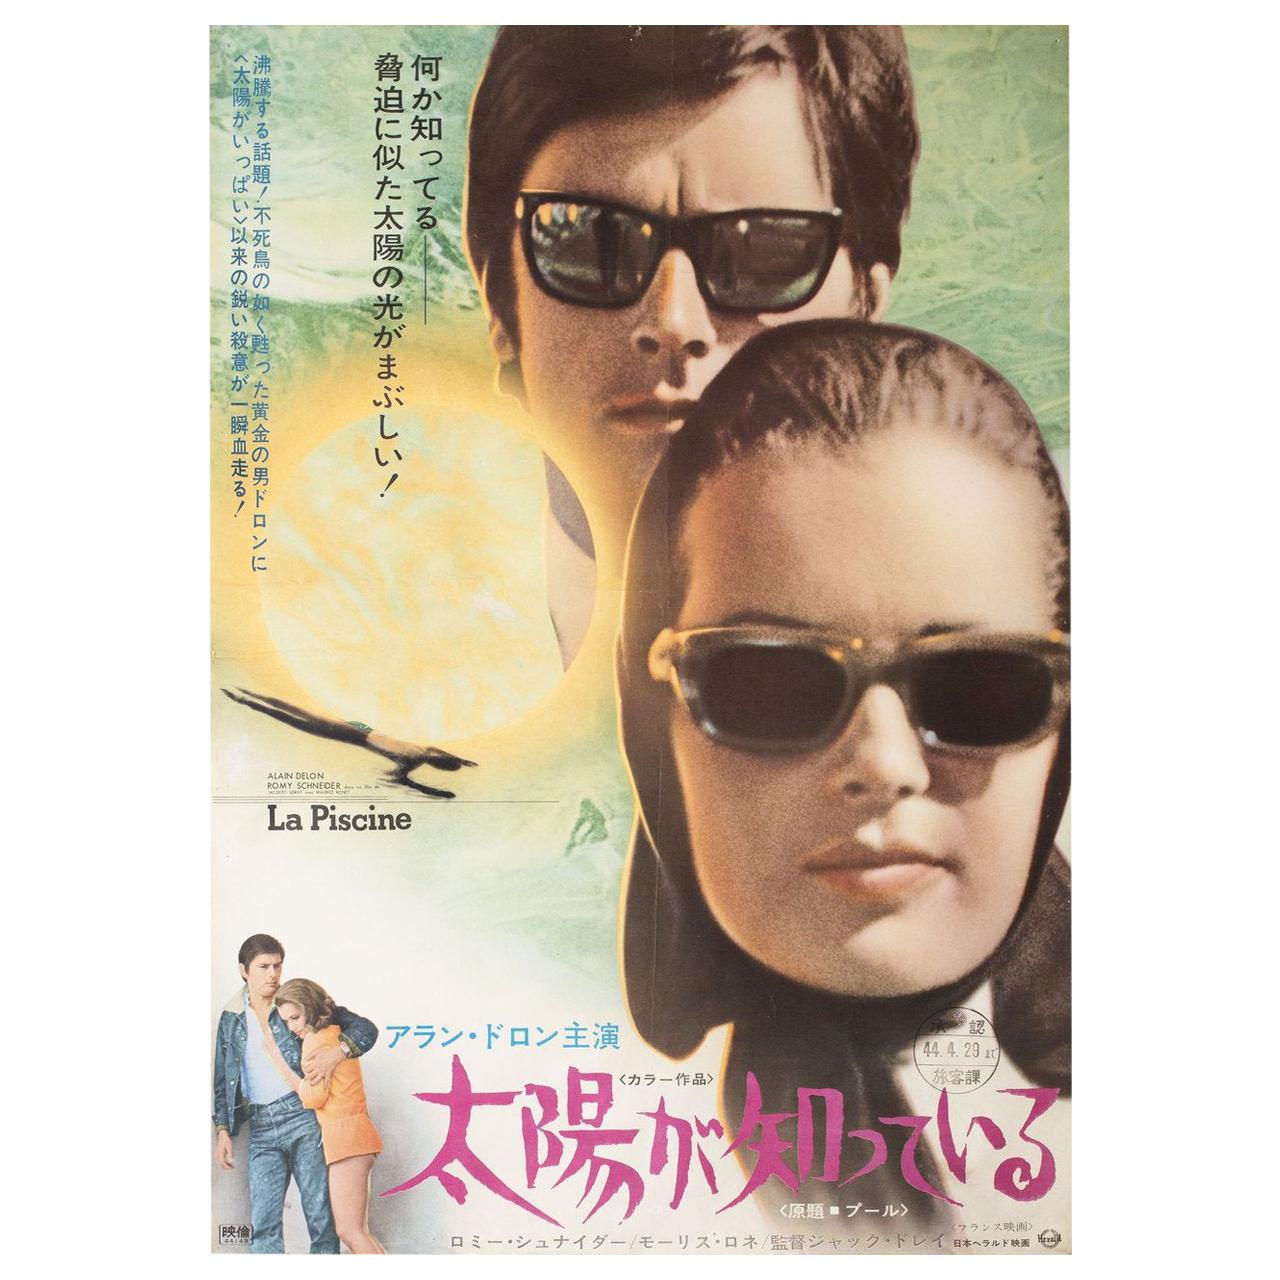 La Piscine 1969 Japanese B2 Film Poster For Sale At 1stdibs